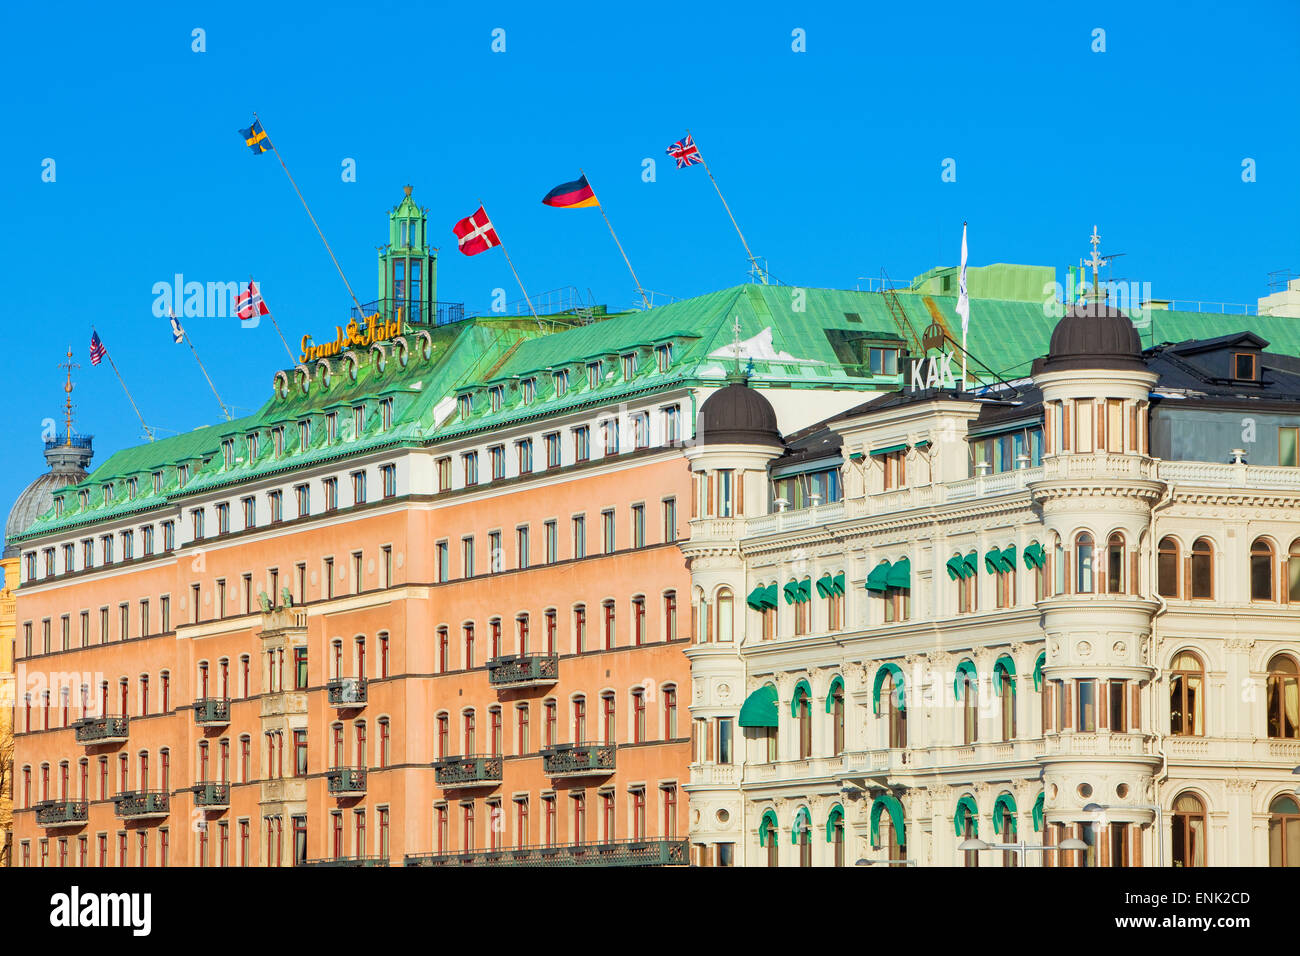 Sweden, Stockholm - Grand Hotel Stock Photo